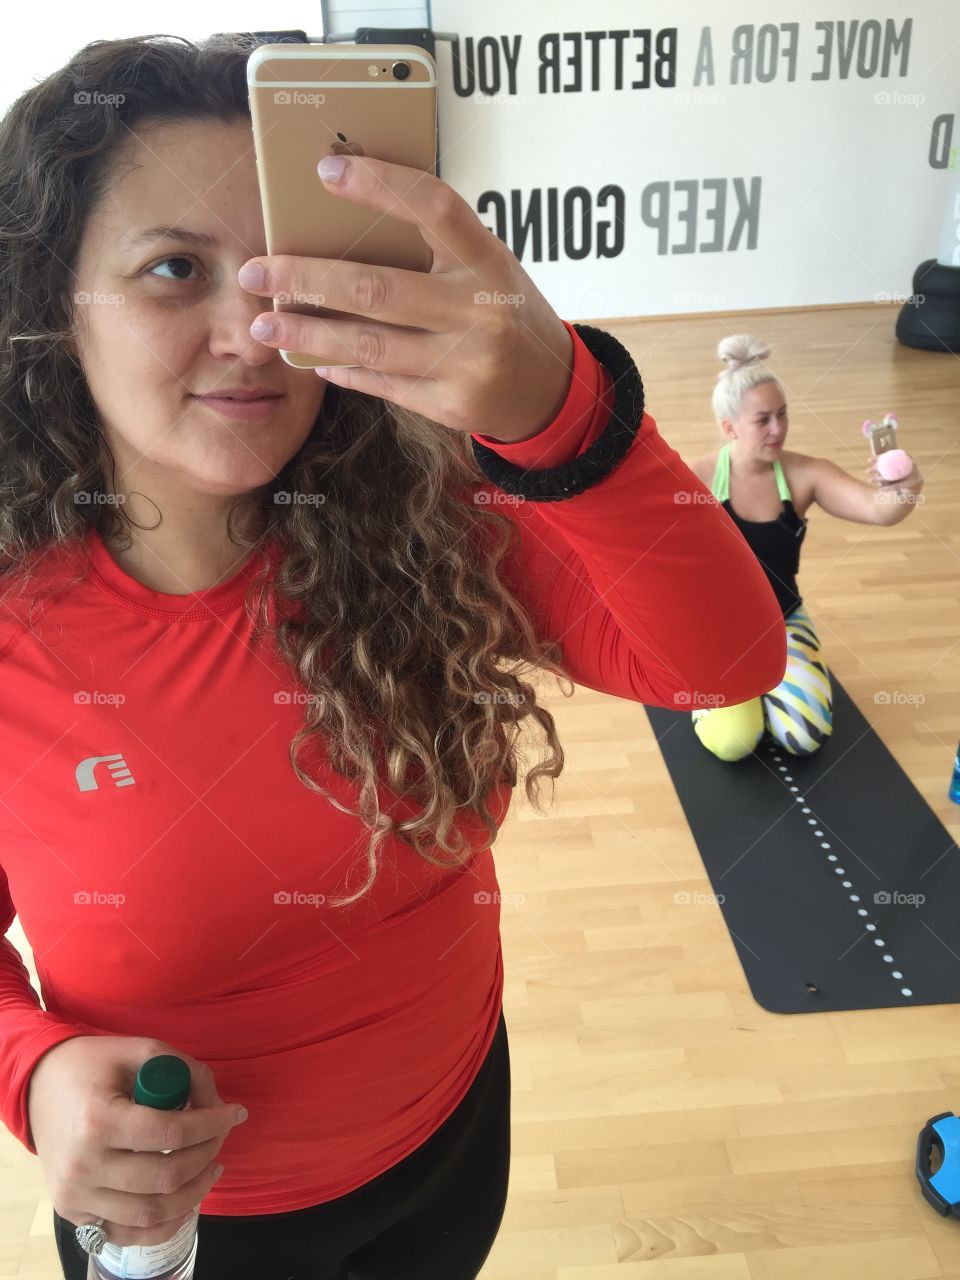 Gym selfie 